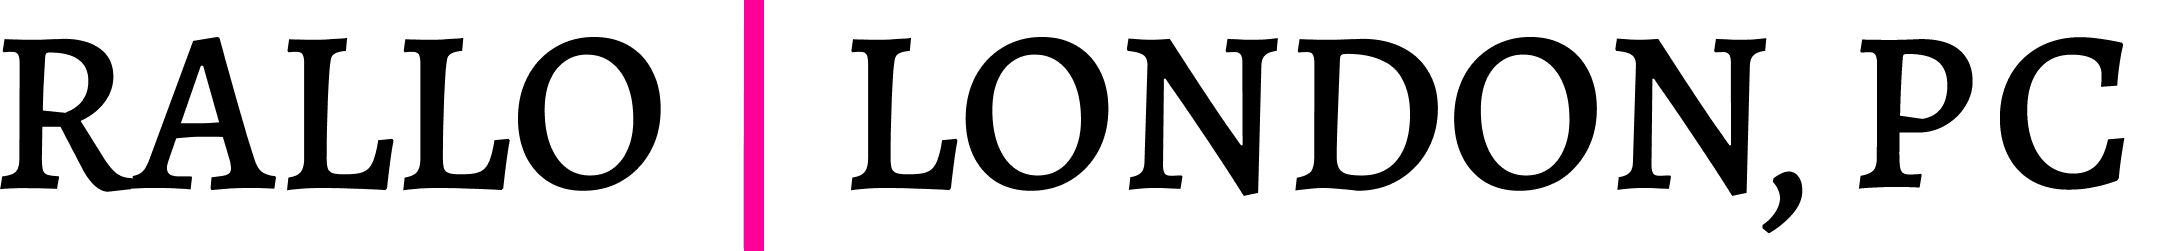 Text logo with text Rallo London, PC